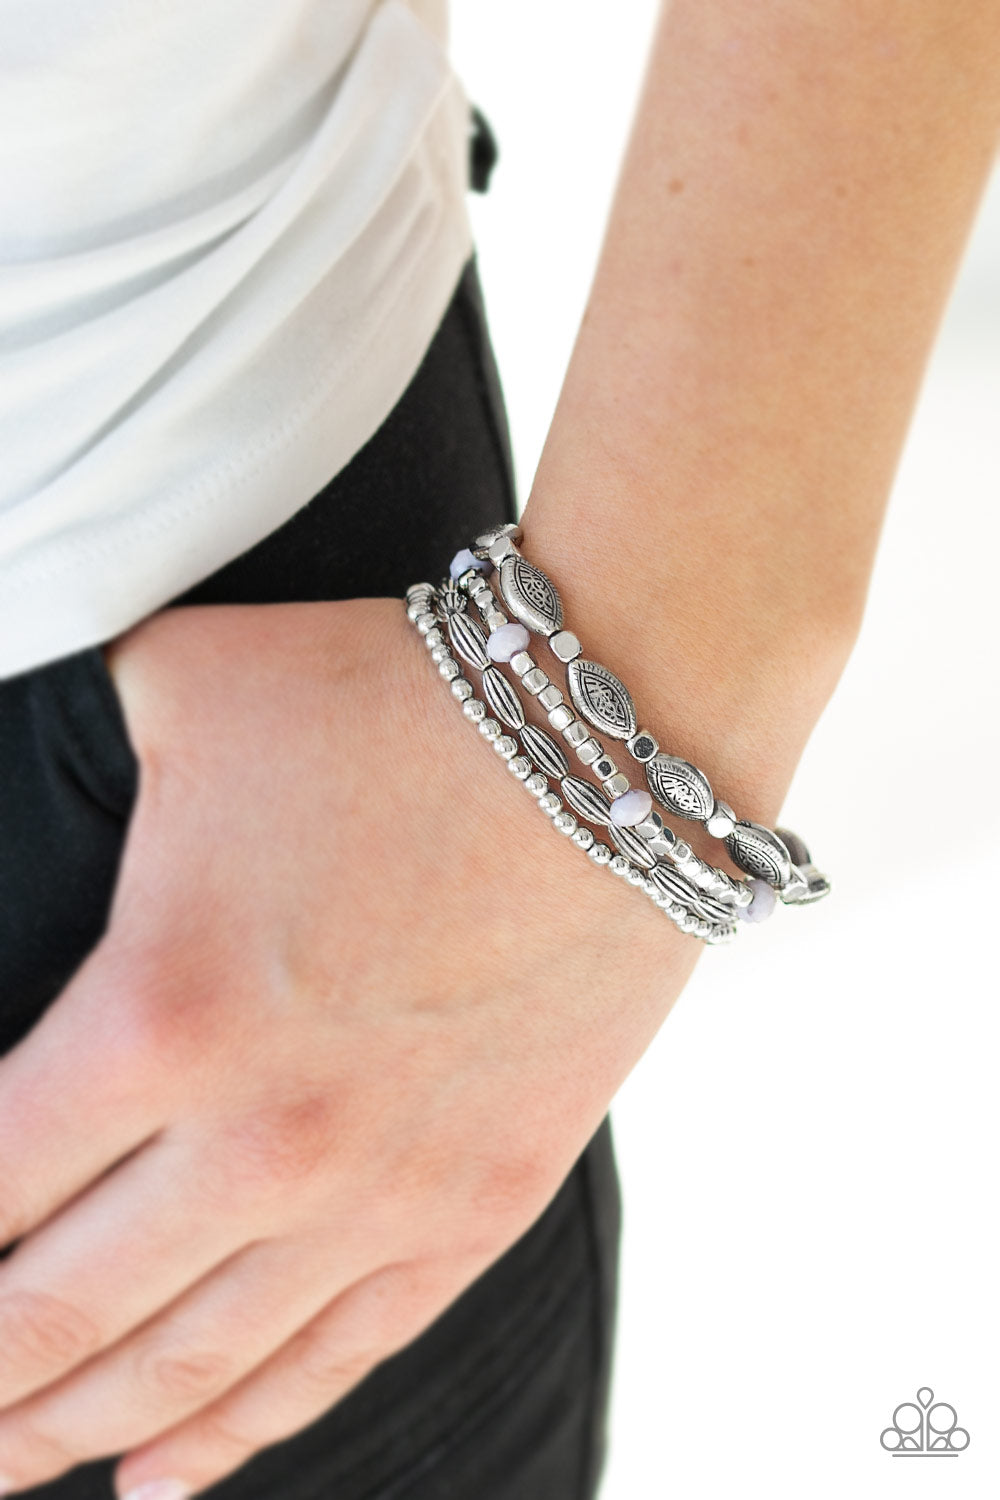 Paparazzi Full Of WANDER - Silver Beads - Bracelet - $5 Jewelry With Ashley Swint